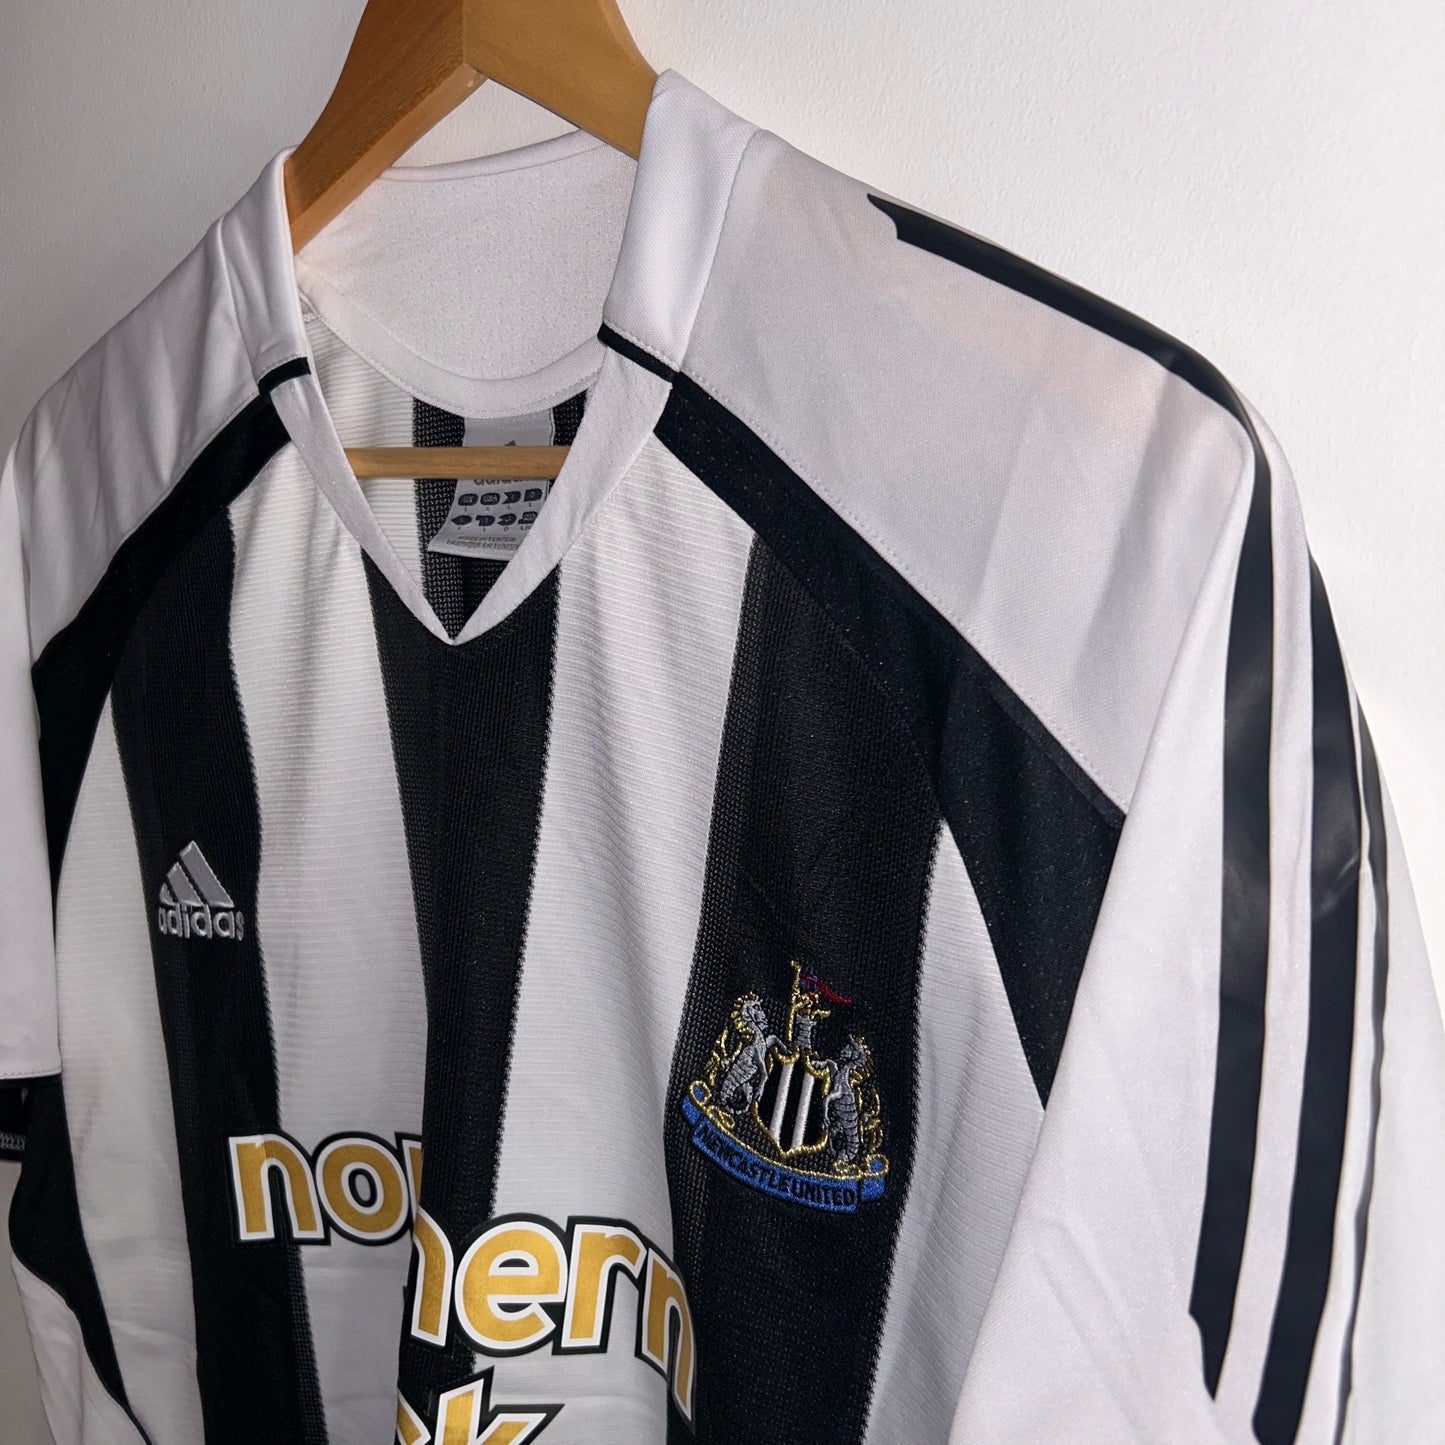 Newcastle 2005/06 Home Shirt